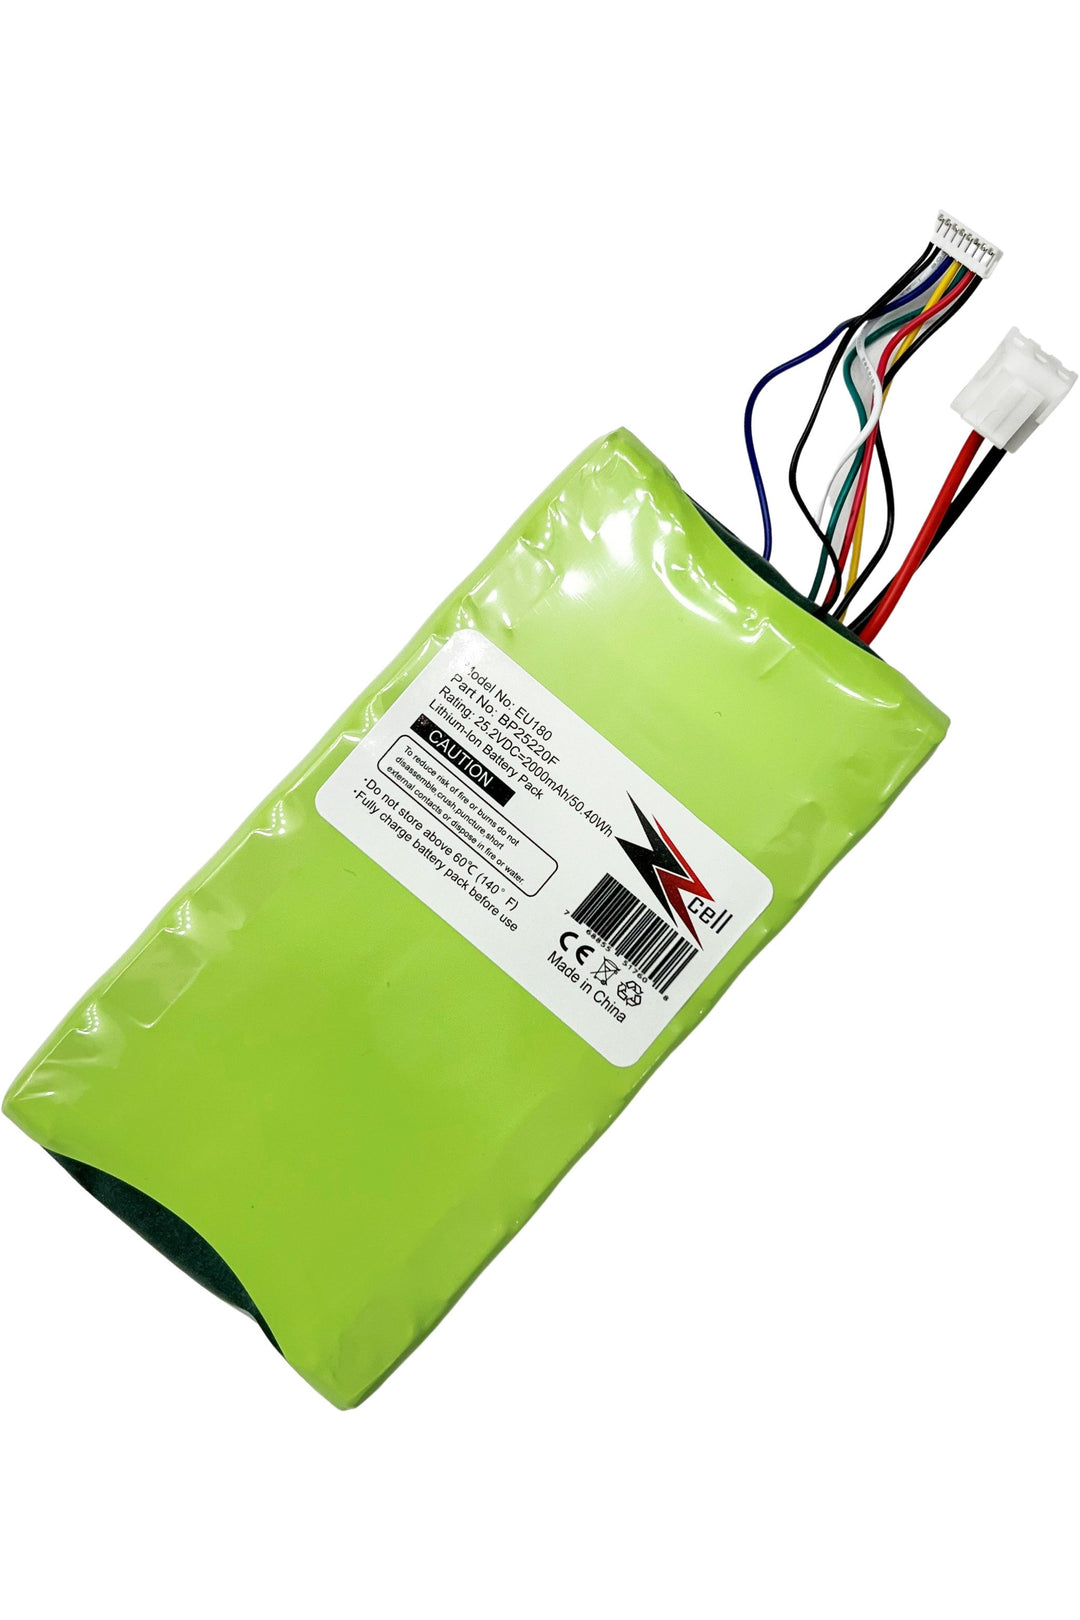 ZZcell Battery Replacement For Eureka RapidClean Pro Cordless Vacuum NEC180, NEC185, BP25220F, 25.2V 2000mAh